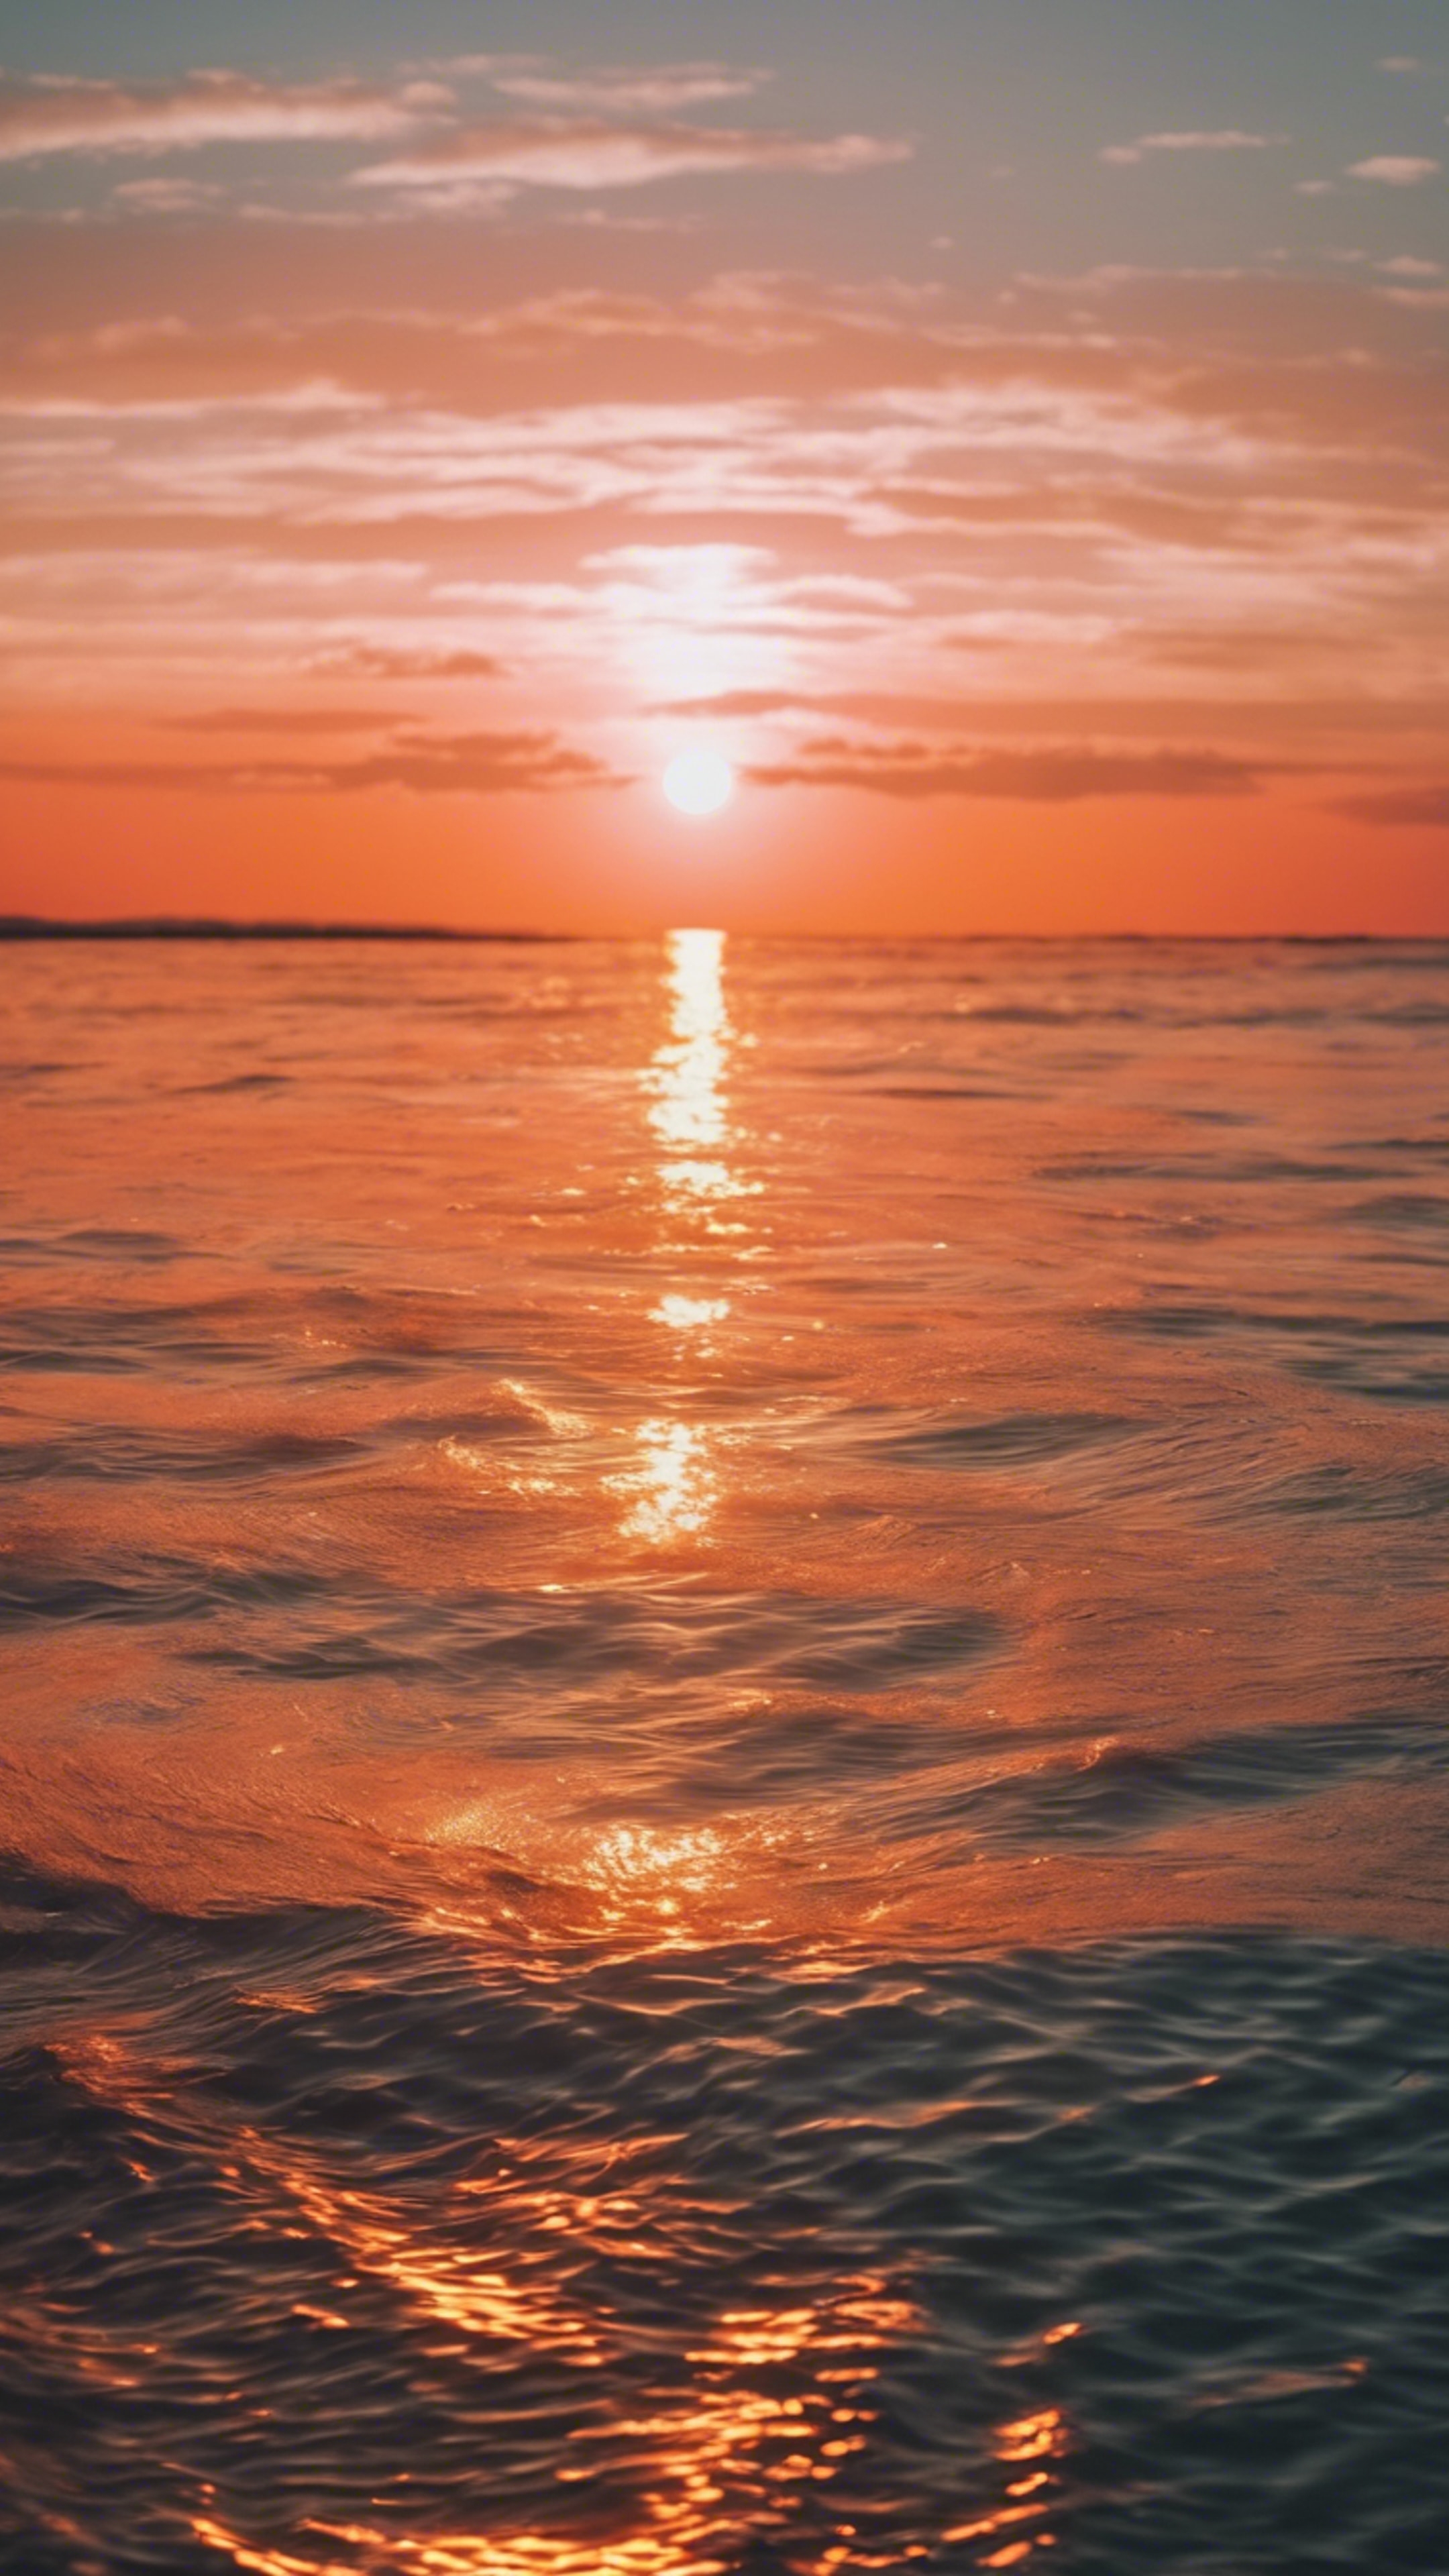 Bright neon orange sun setting over a calm sea. Papel de parede[6f90c626ce0243a7b617]